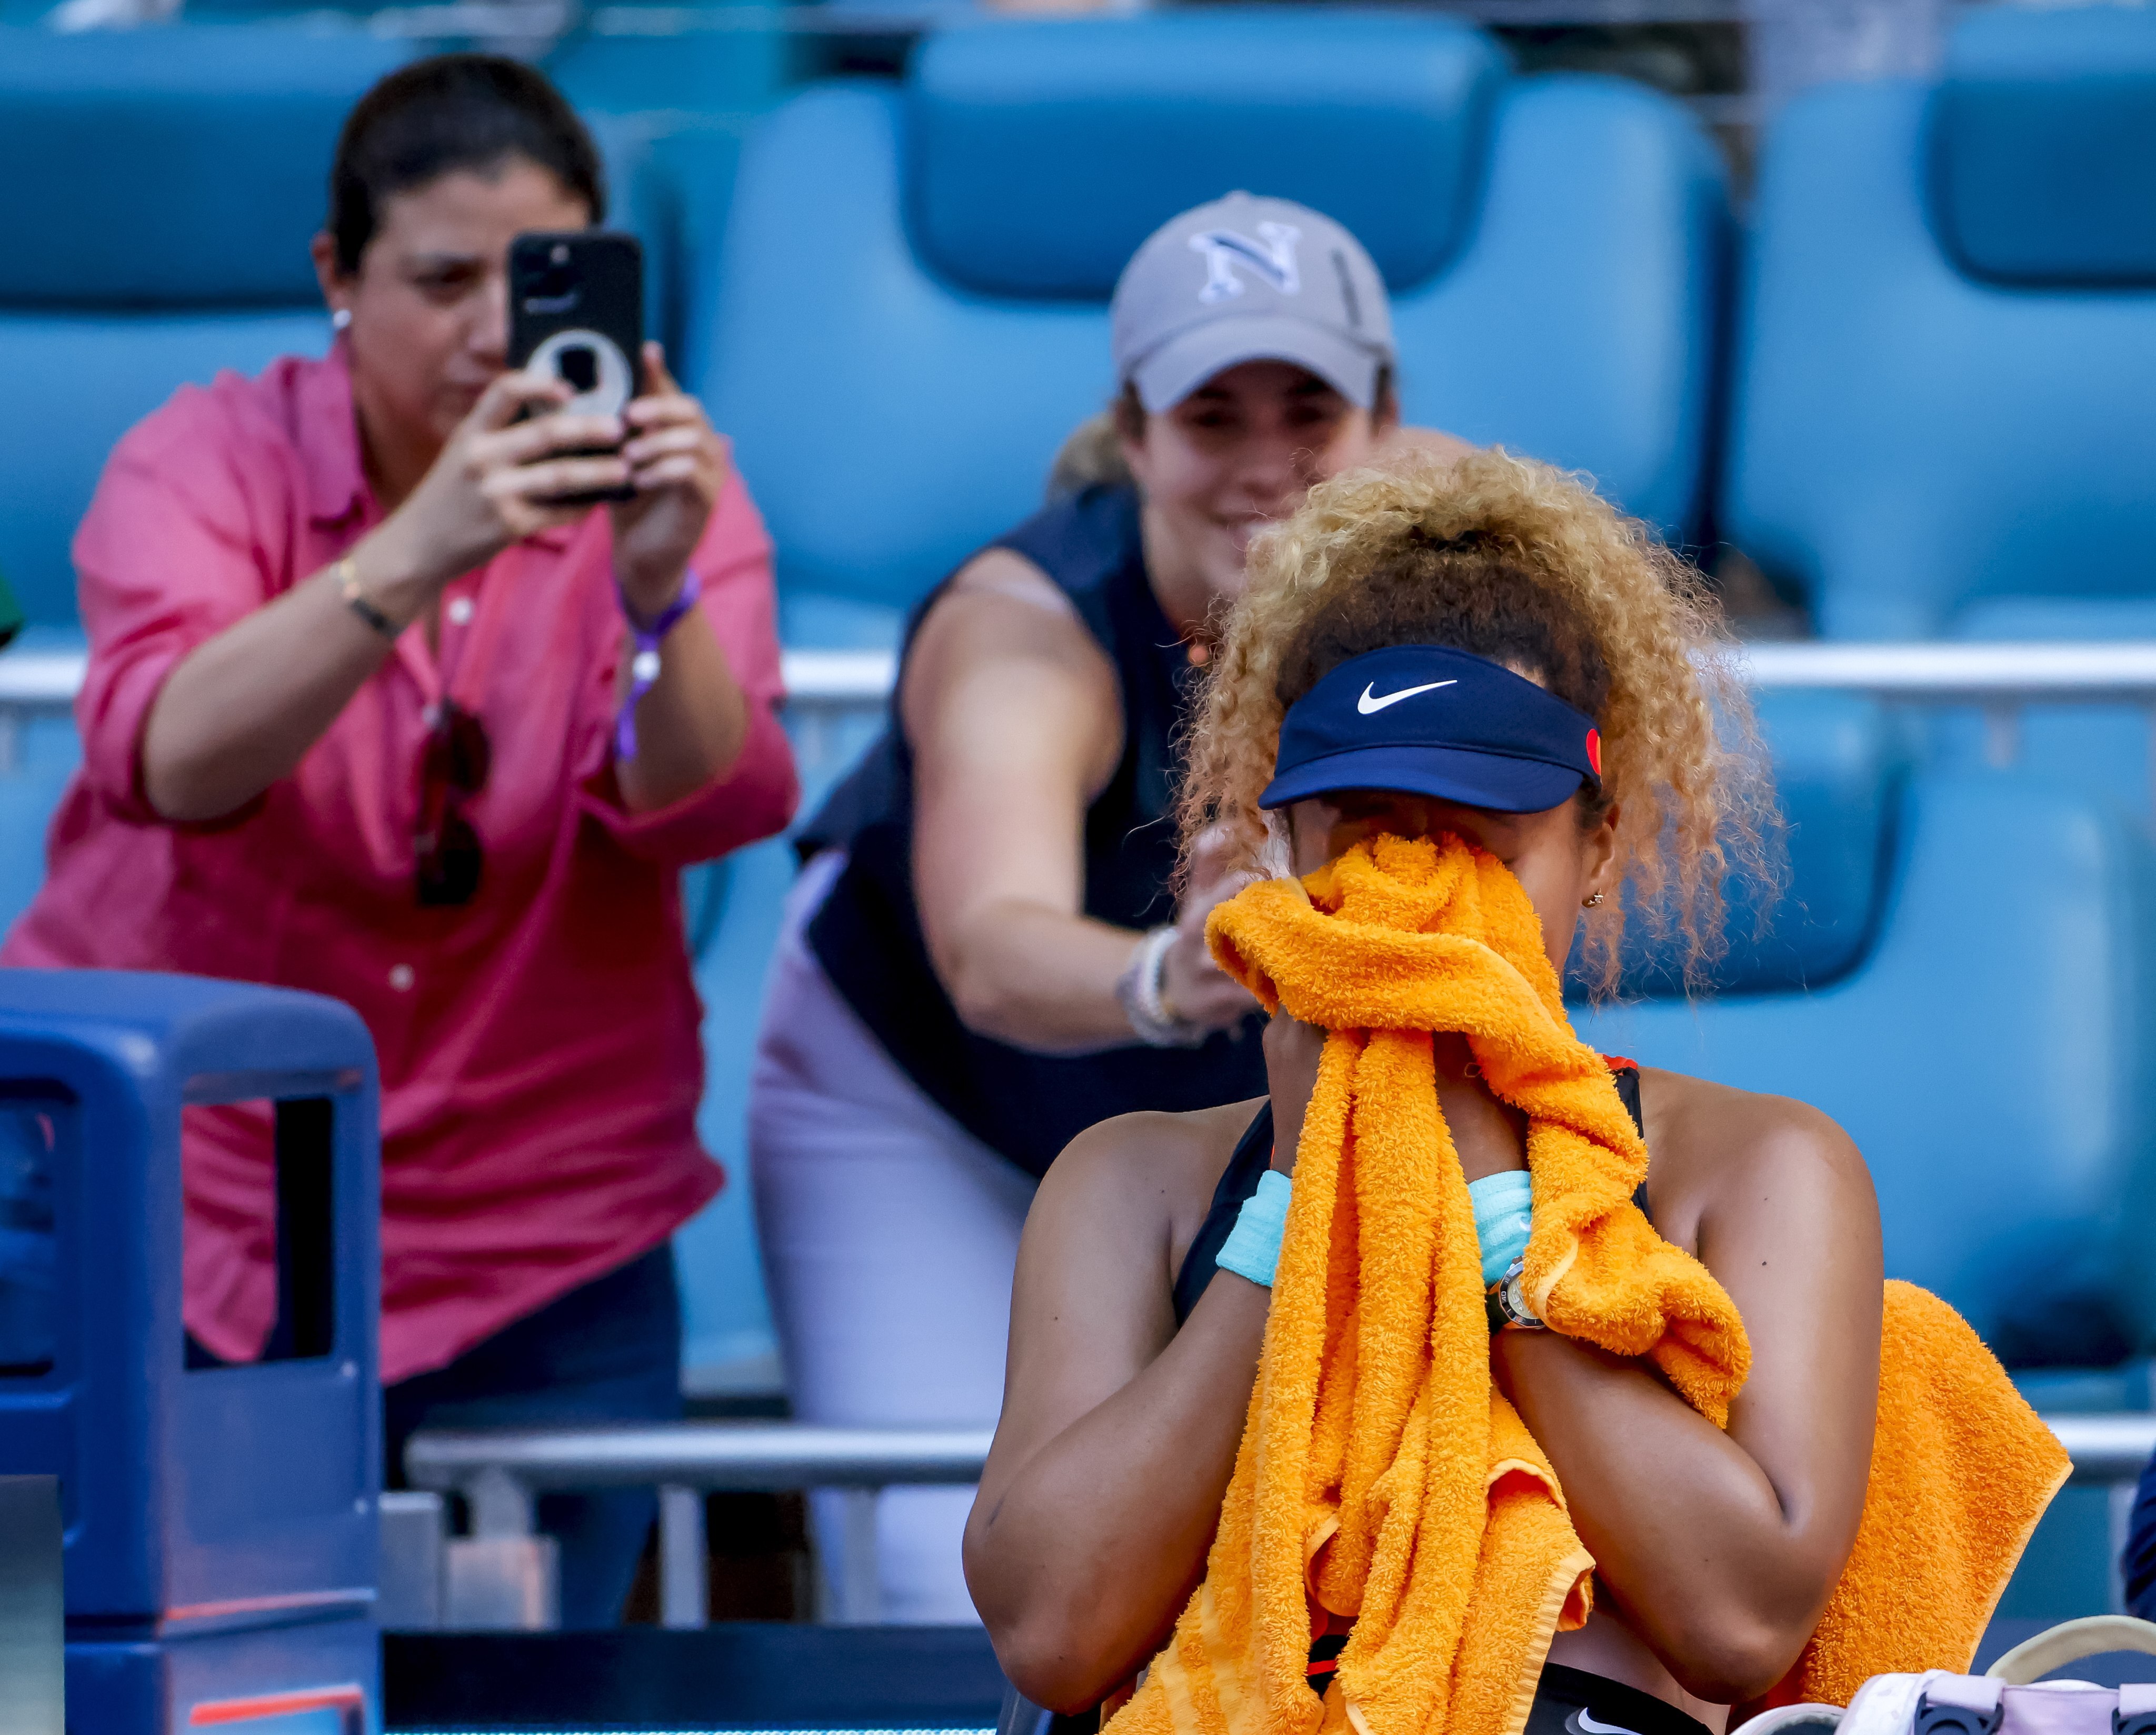 An emotional Naomi Osaka reacts after beating Belinda Bencic at the Miami Open. Photo: EPA-EFE